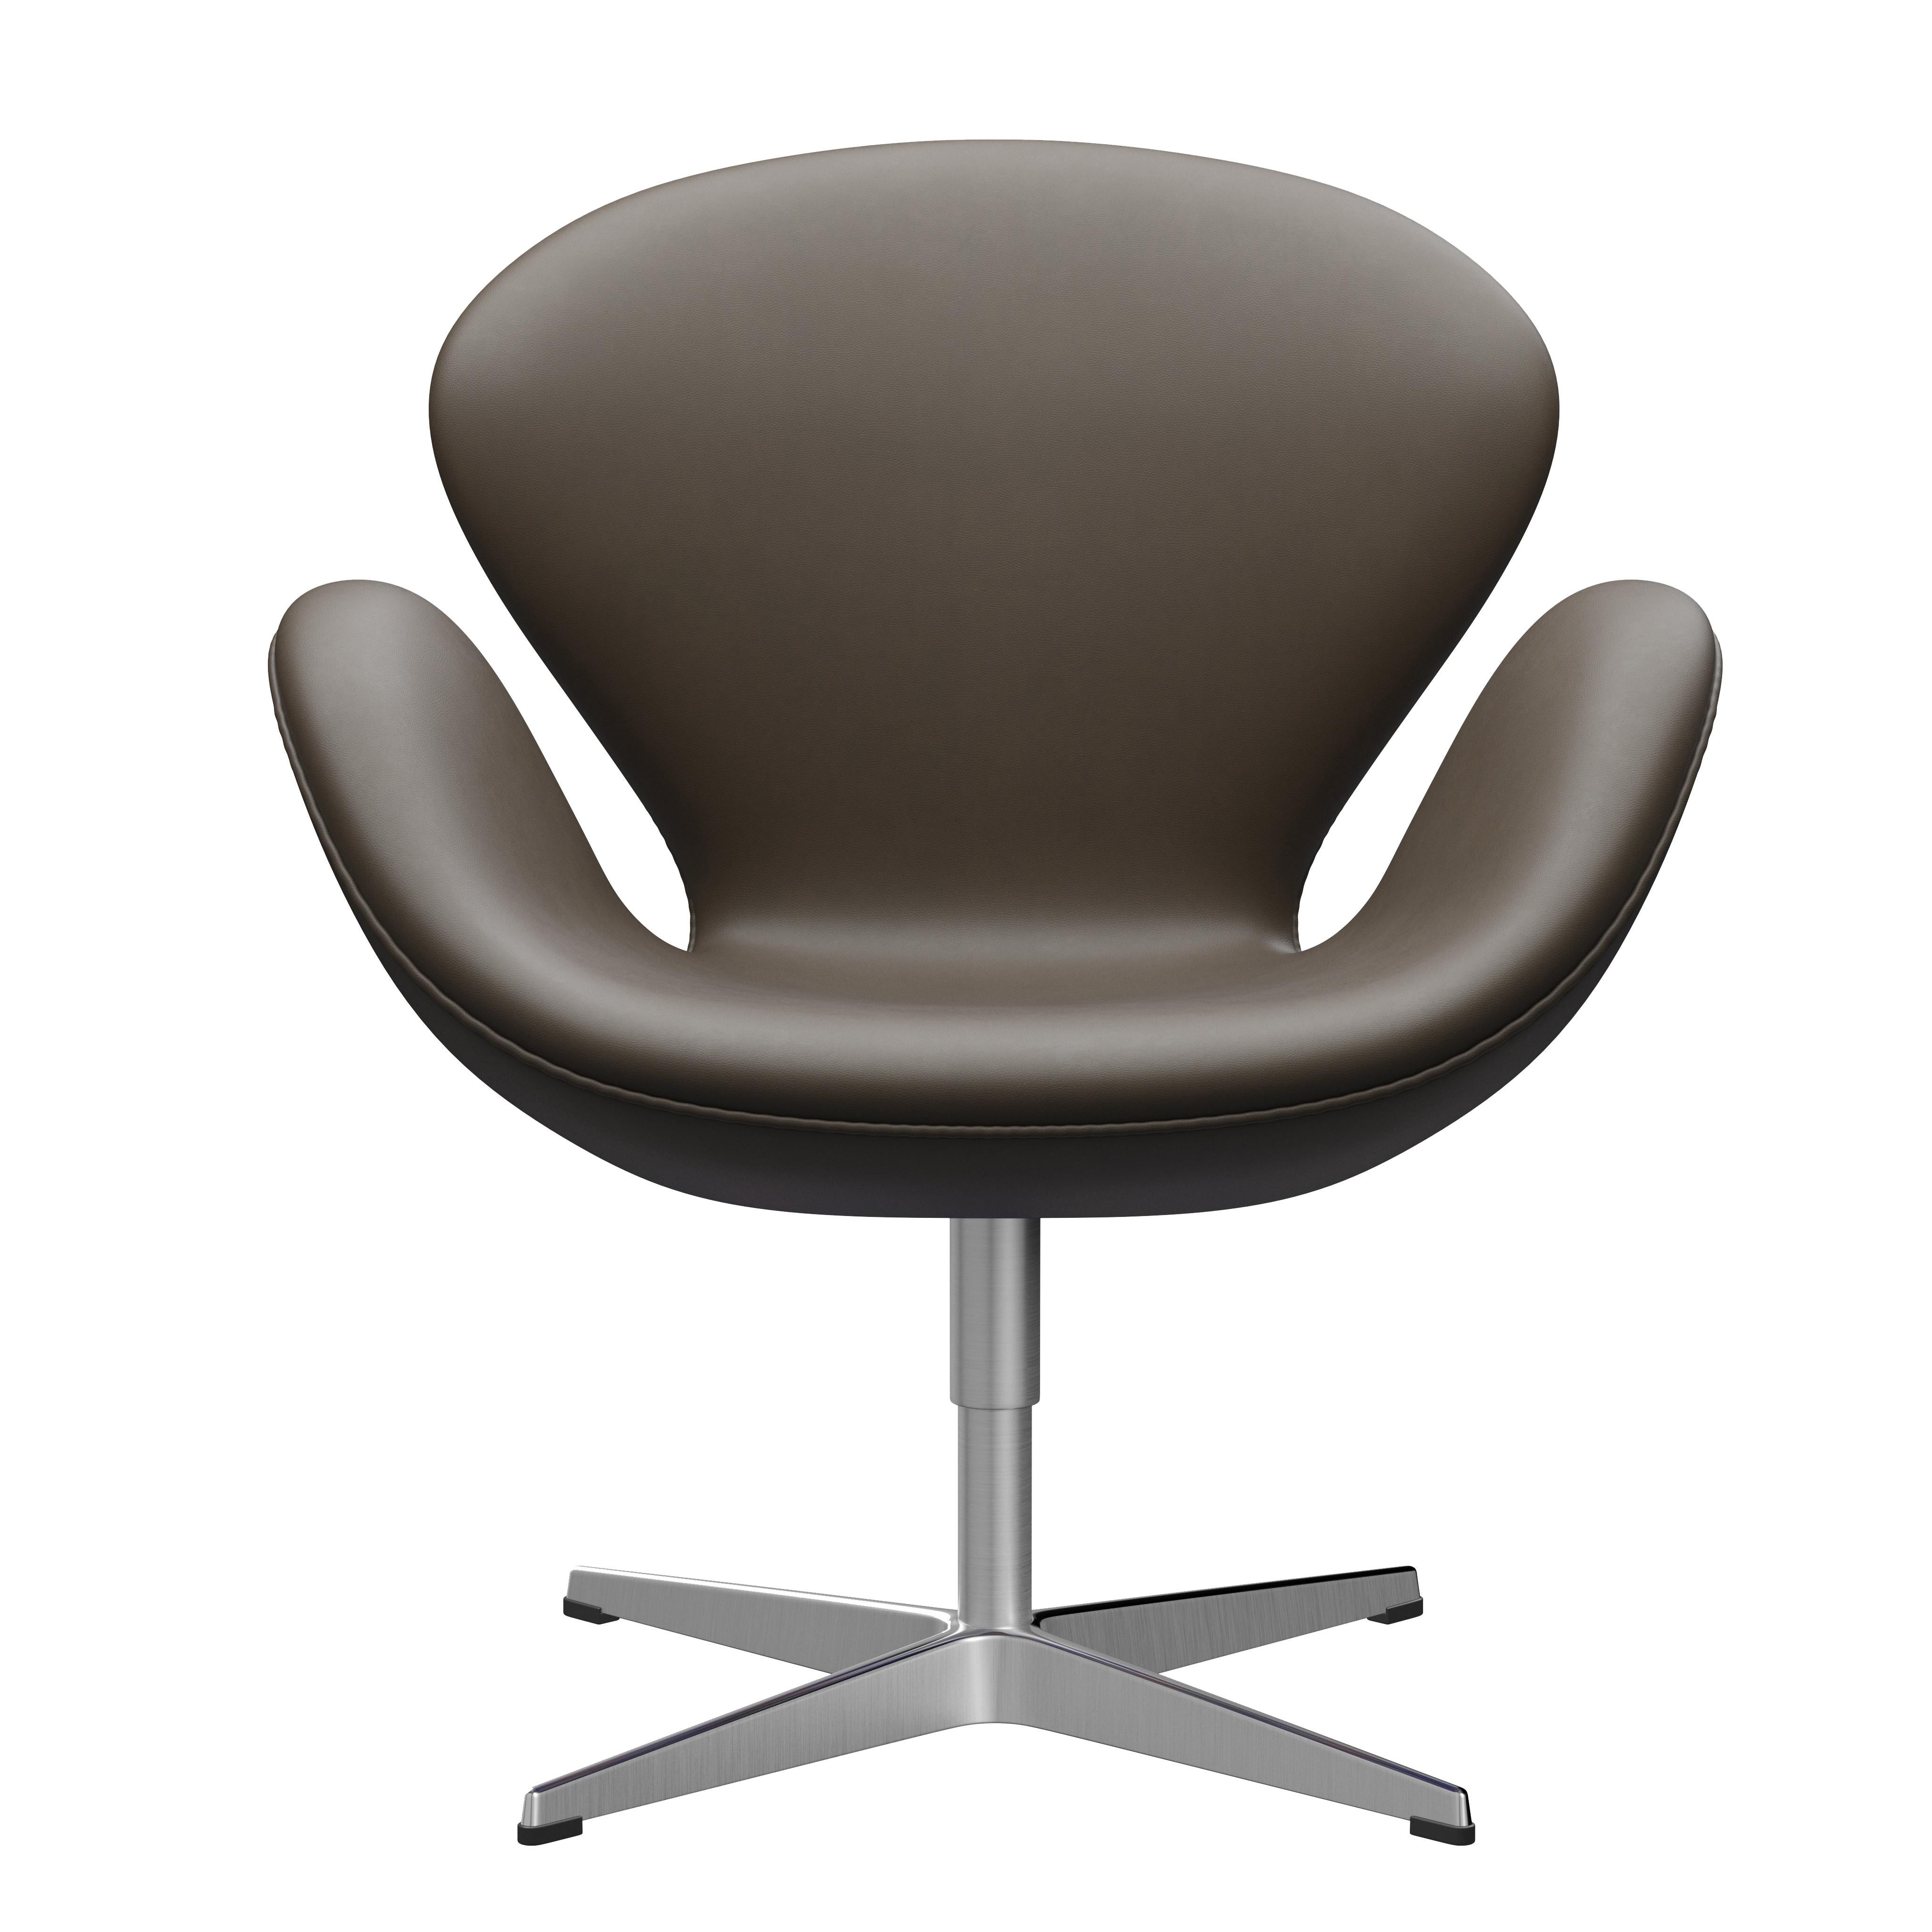 Arne Jacobsen 'Swan' Chair for Fritz Hansen in Leather Upholstery (Cat. 3) For Sale 10